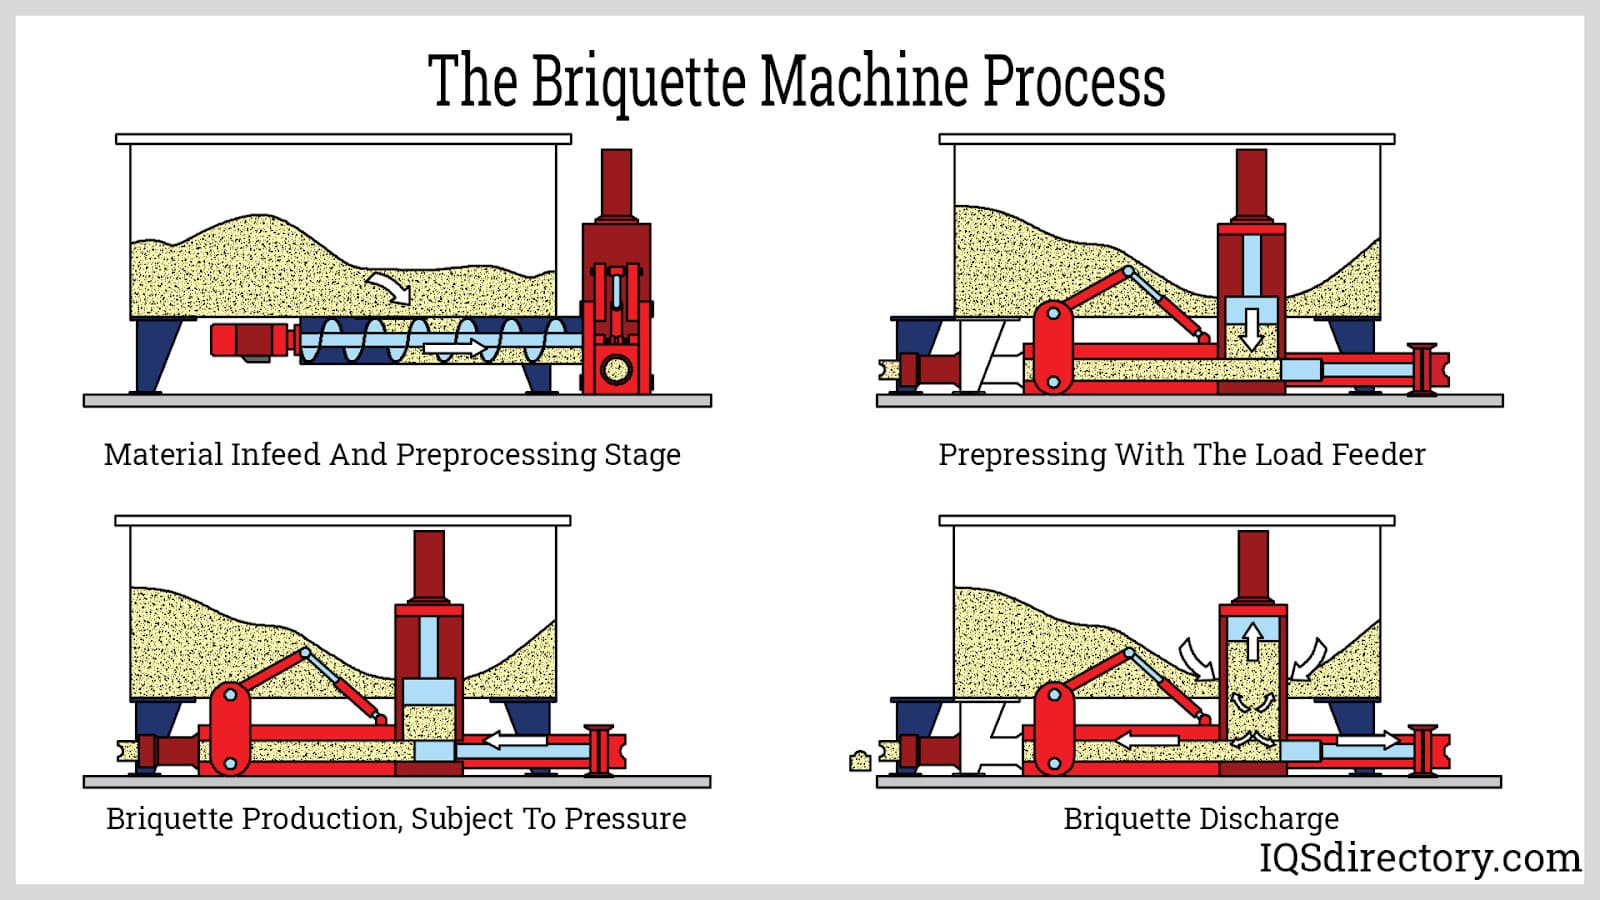 The Briquette Machine Process